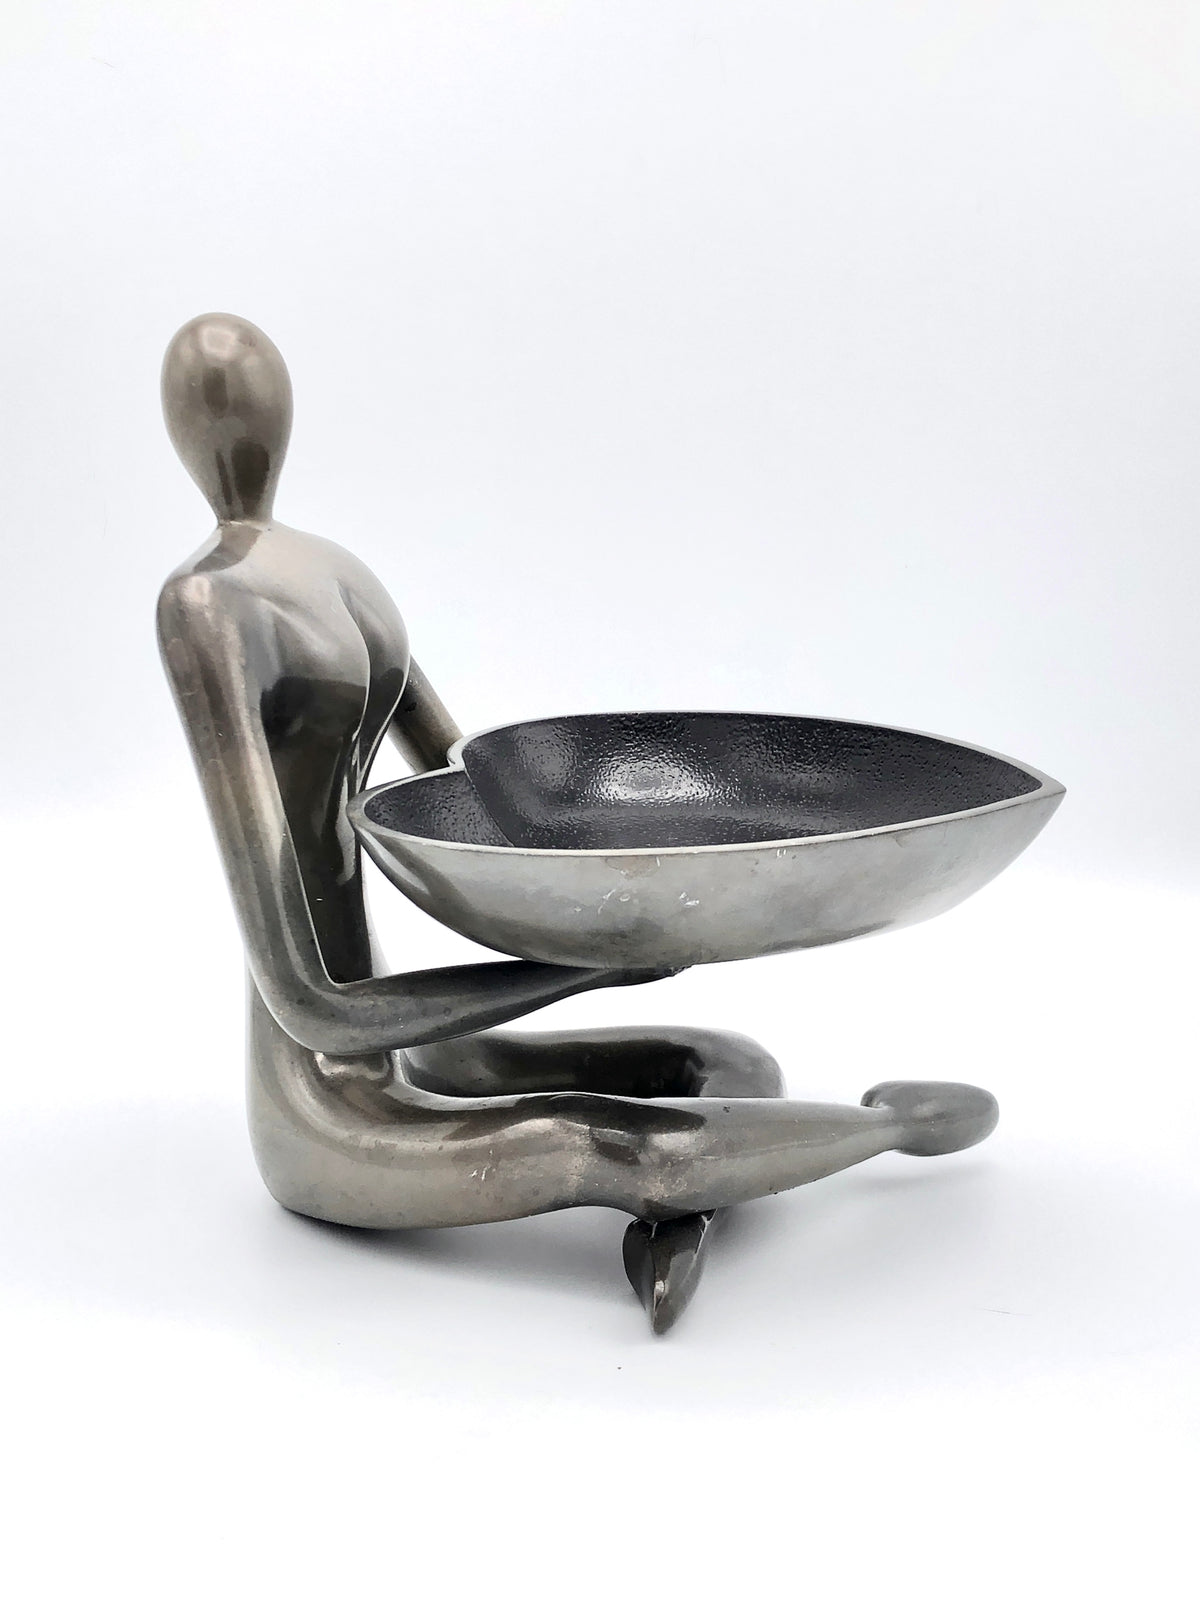 Sculptural Metal Catchall / Dish